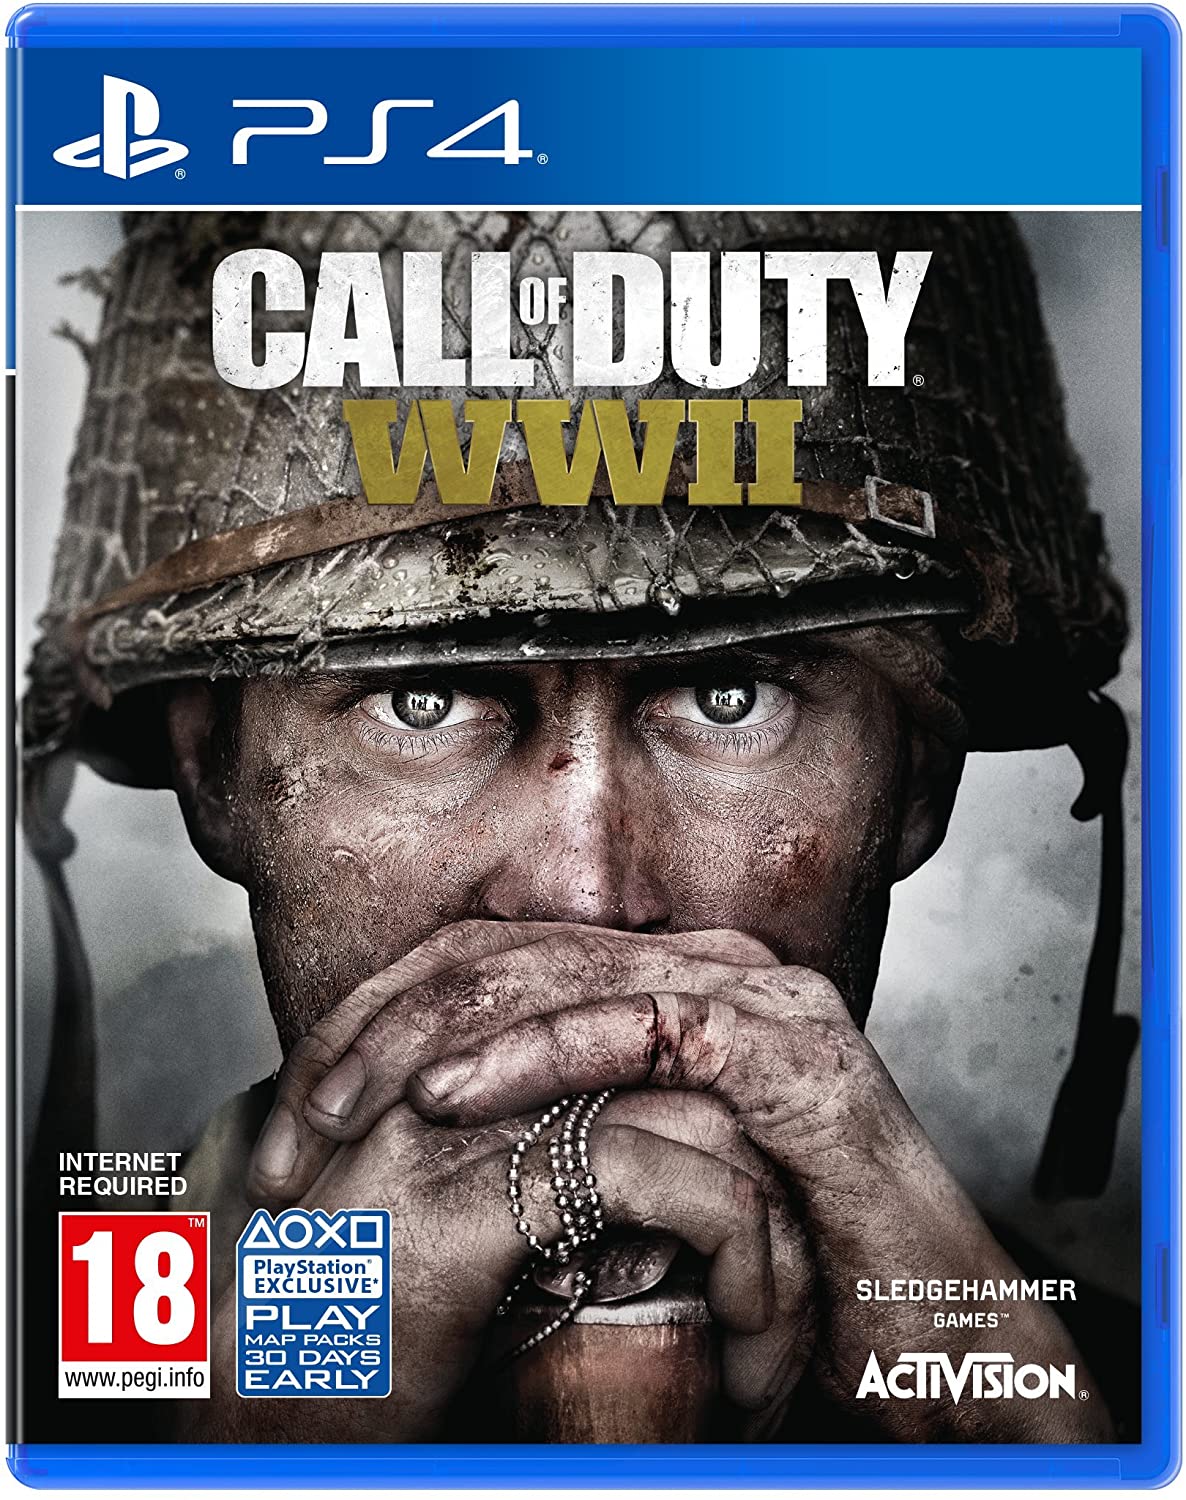 Call of Duty World War II PS4